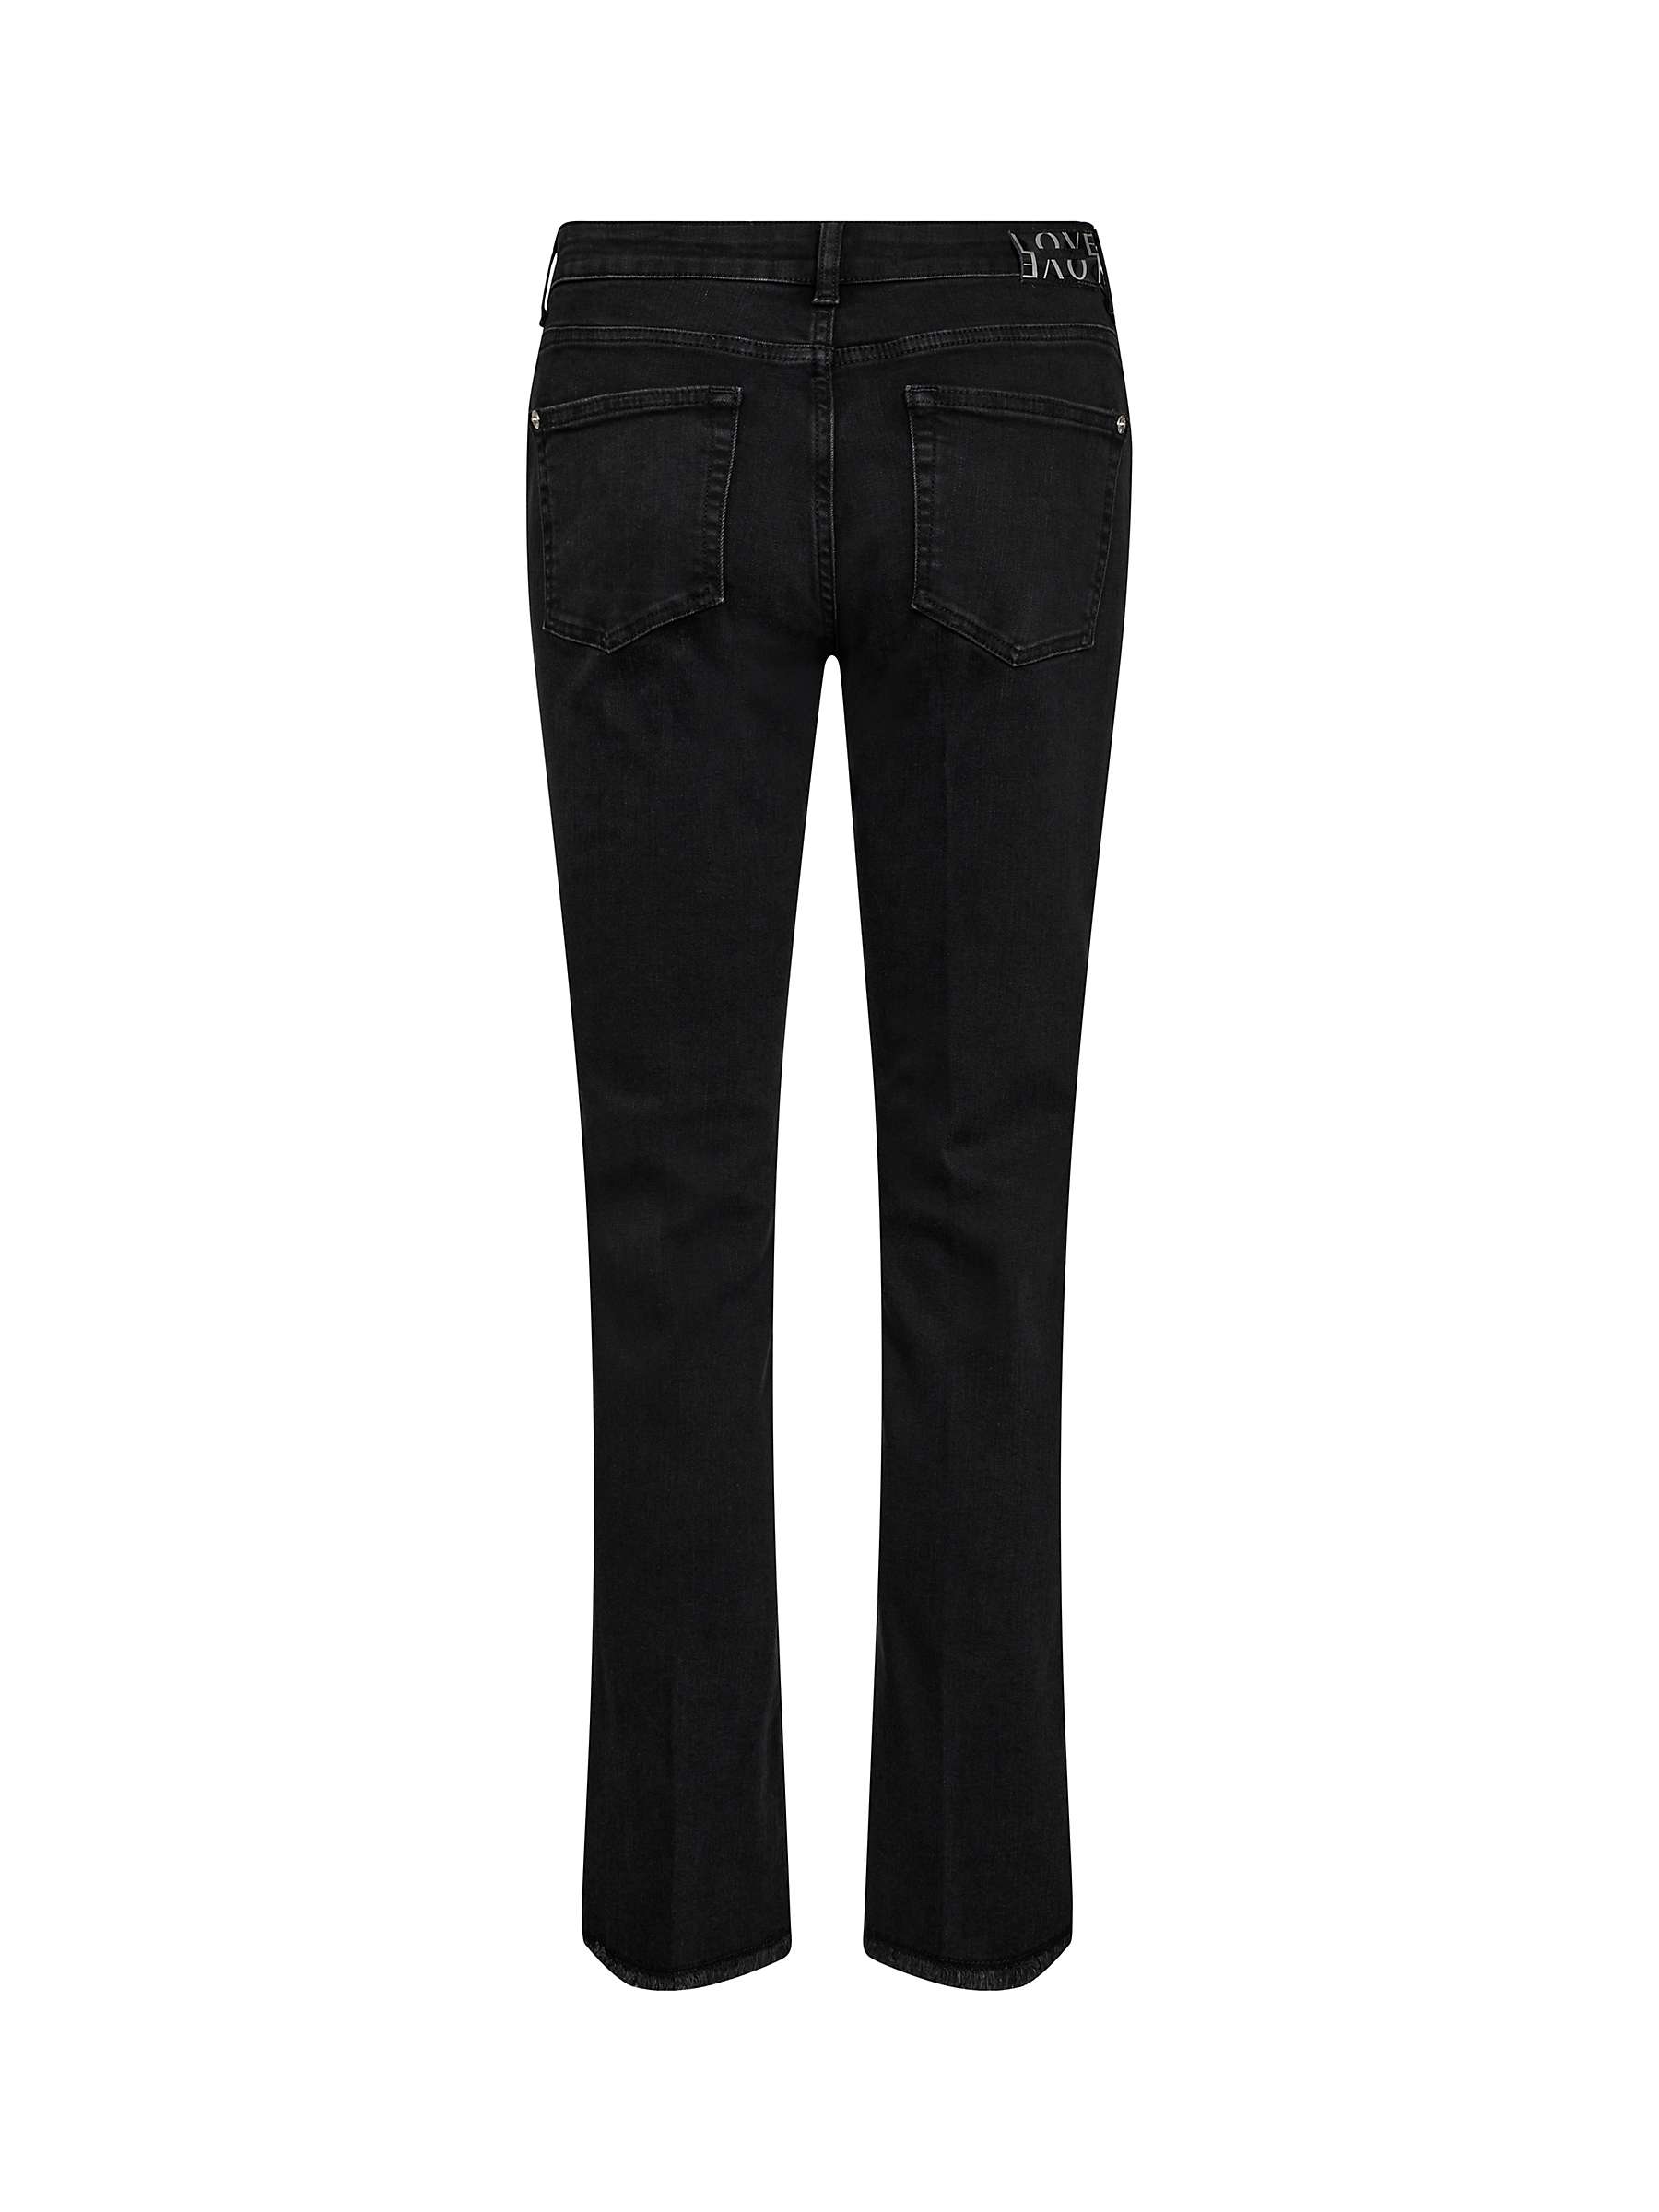 Buy MOS MOSH Ashley Imera Flared Jeans, Black Online at johnlewis.com